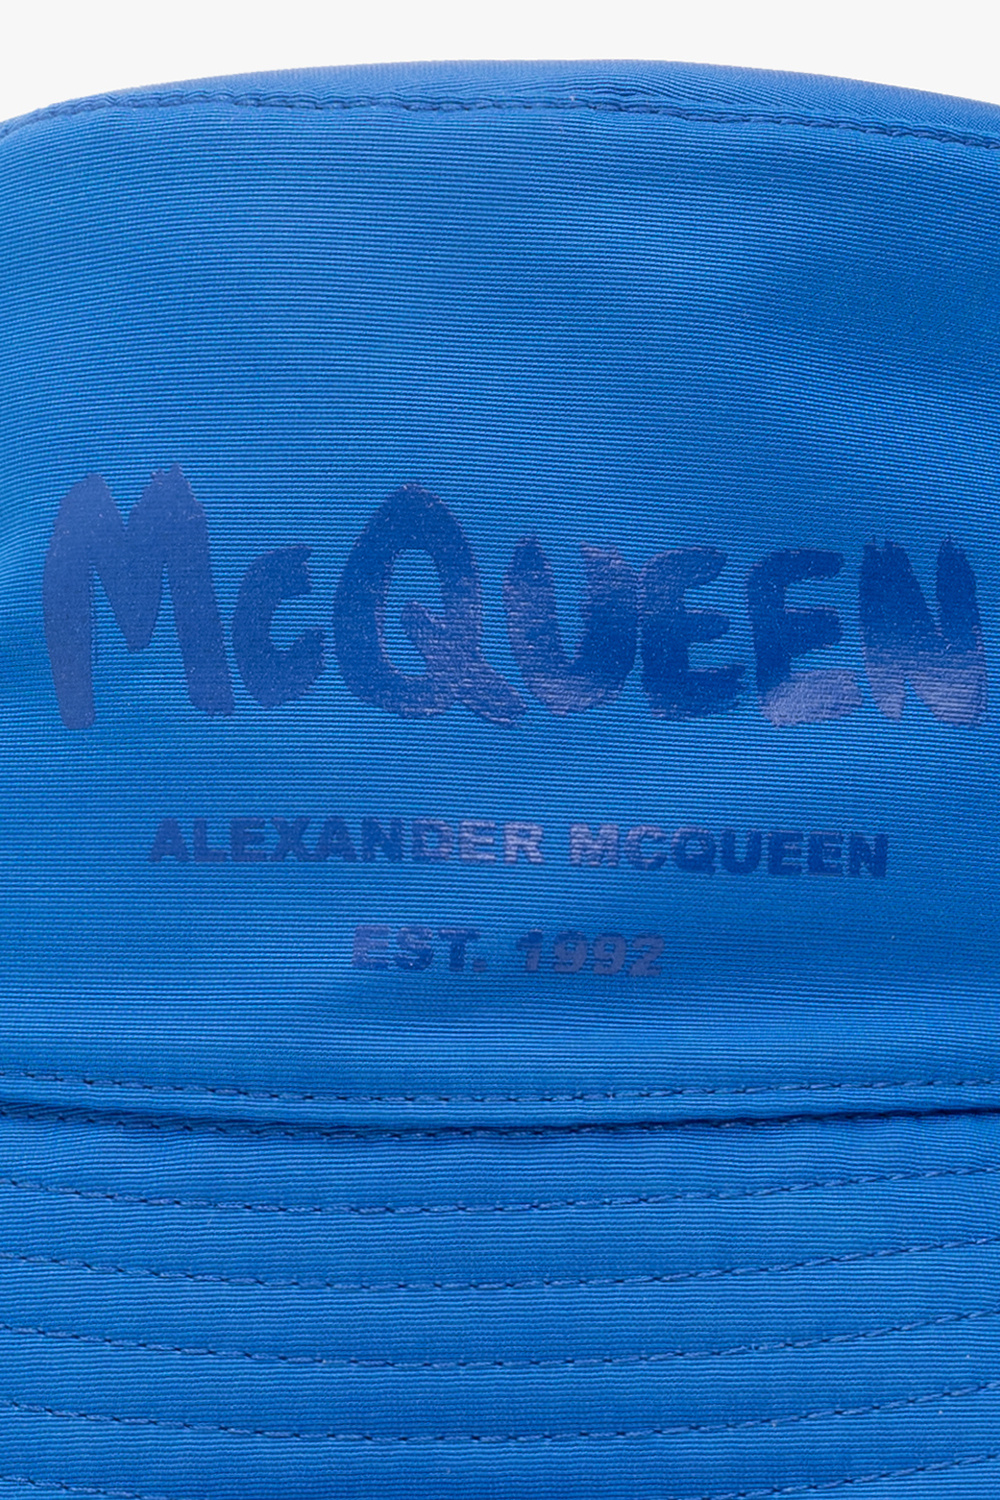 Alexander McQueen usb Grey footwear-accessories accessories polo-shirts caps women Books